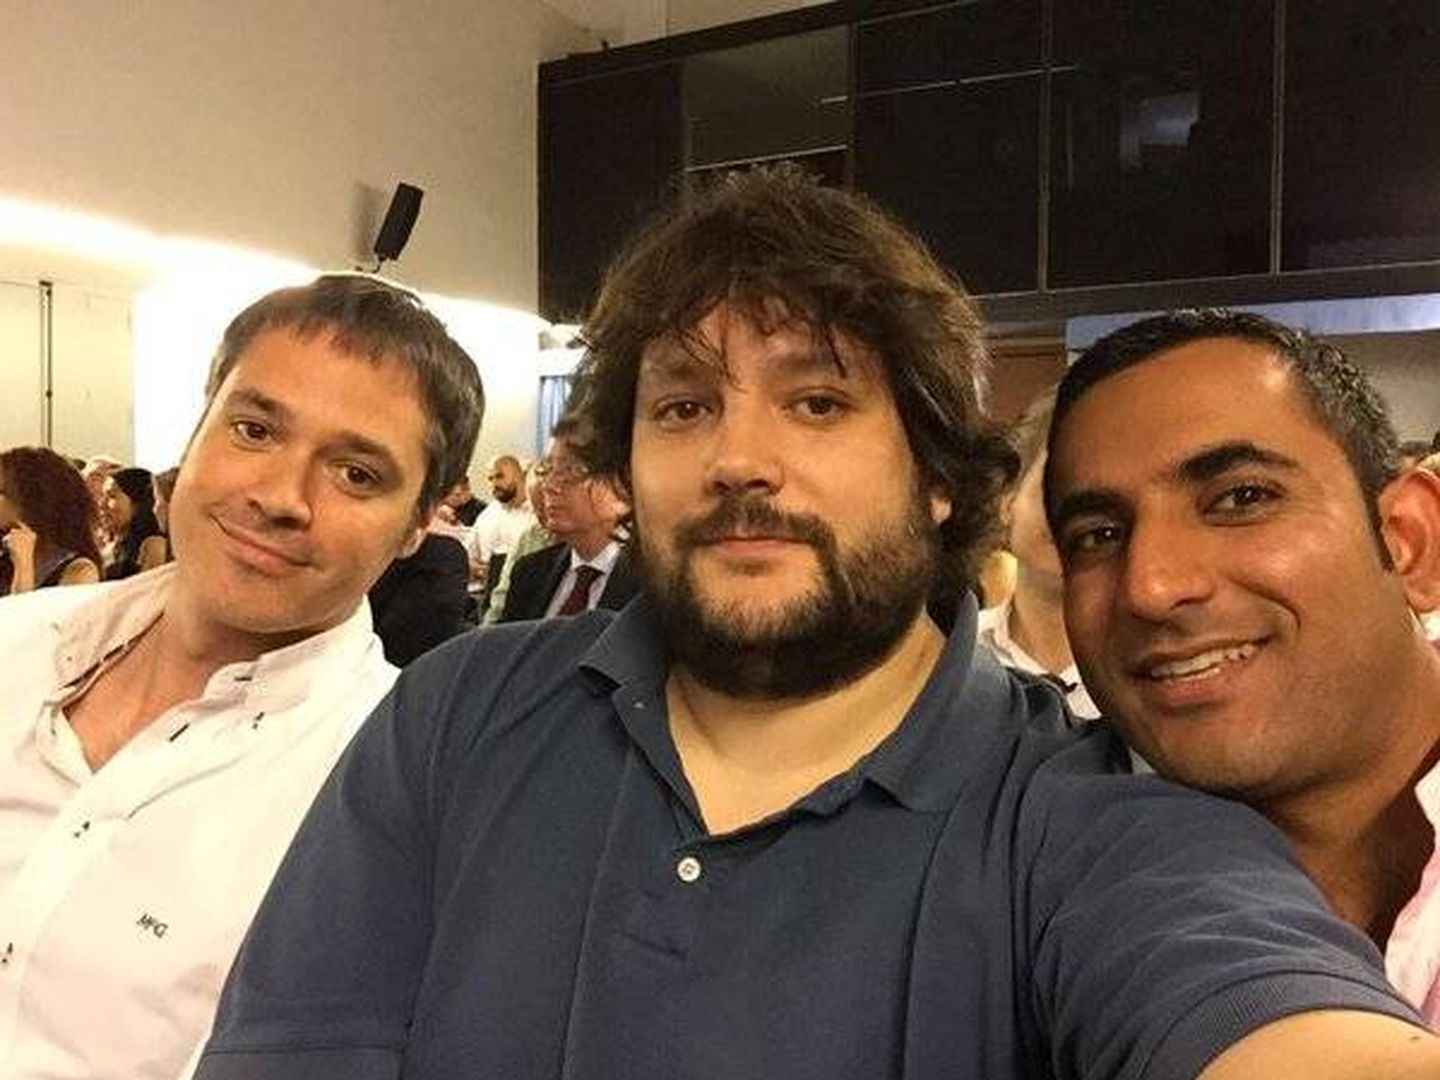 Los fundadores de Beroomers, Guillermo Ruiz, Antonio Huerta y Sunil Mahtani. (@SunilMahtani)